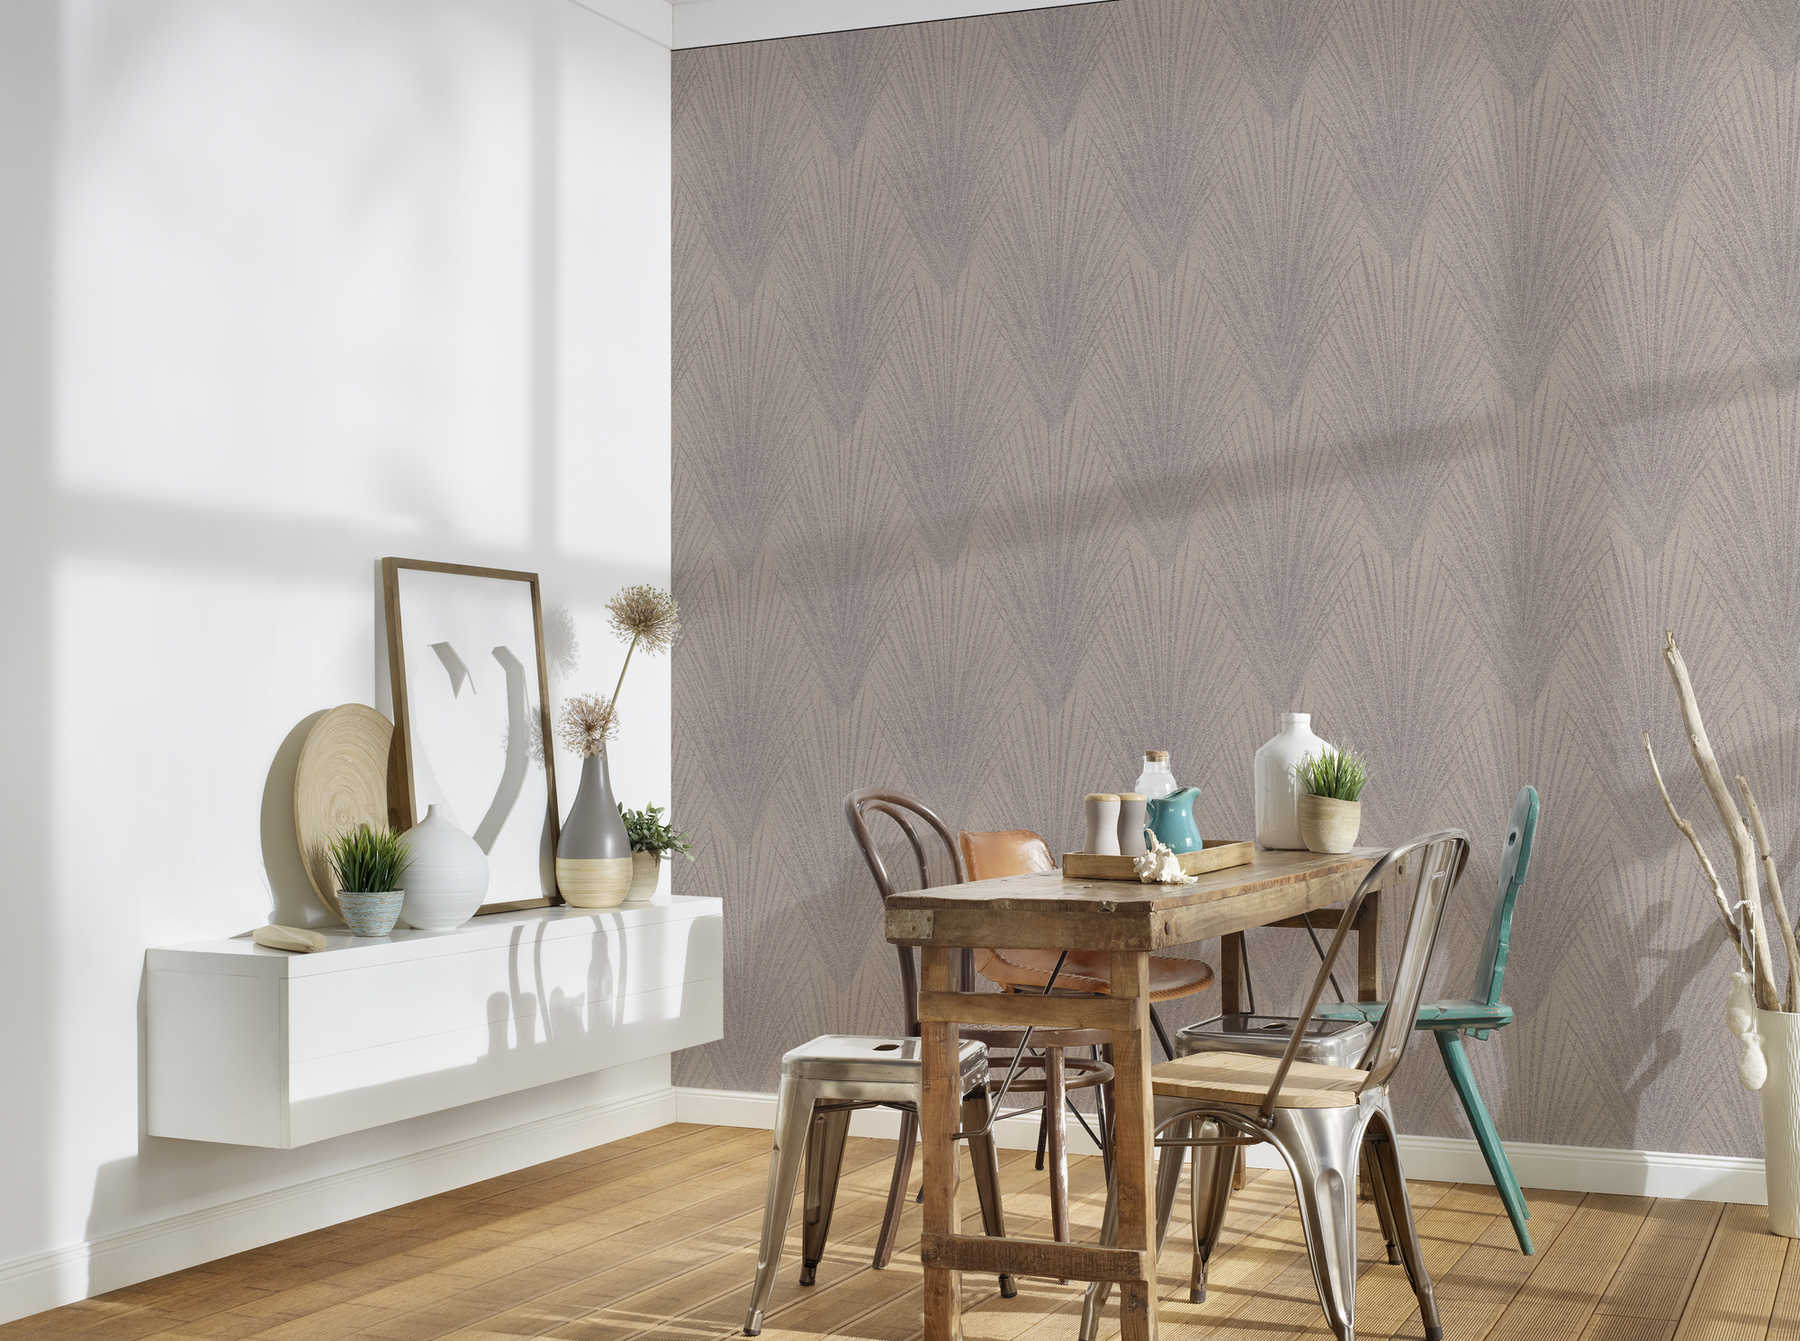             Fern leaf pattern wallpaper abstract design - brown, beige
        